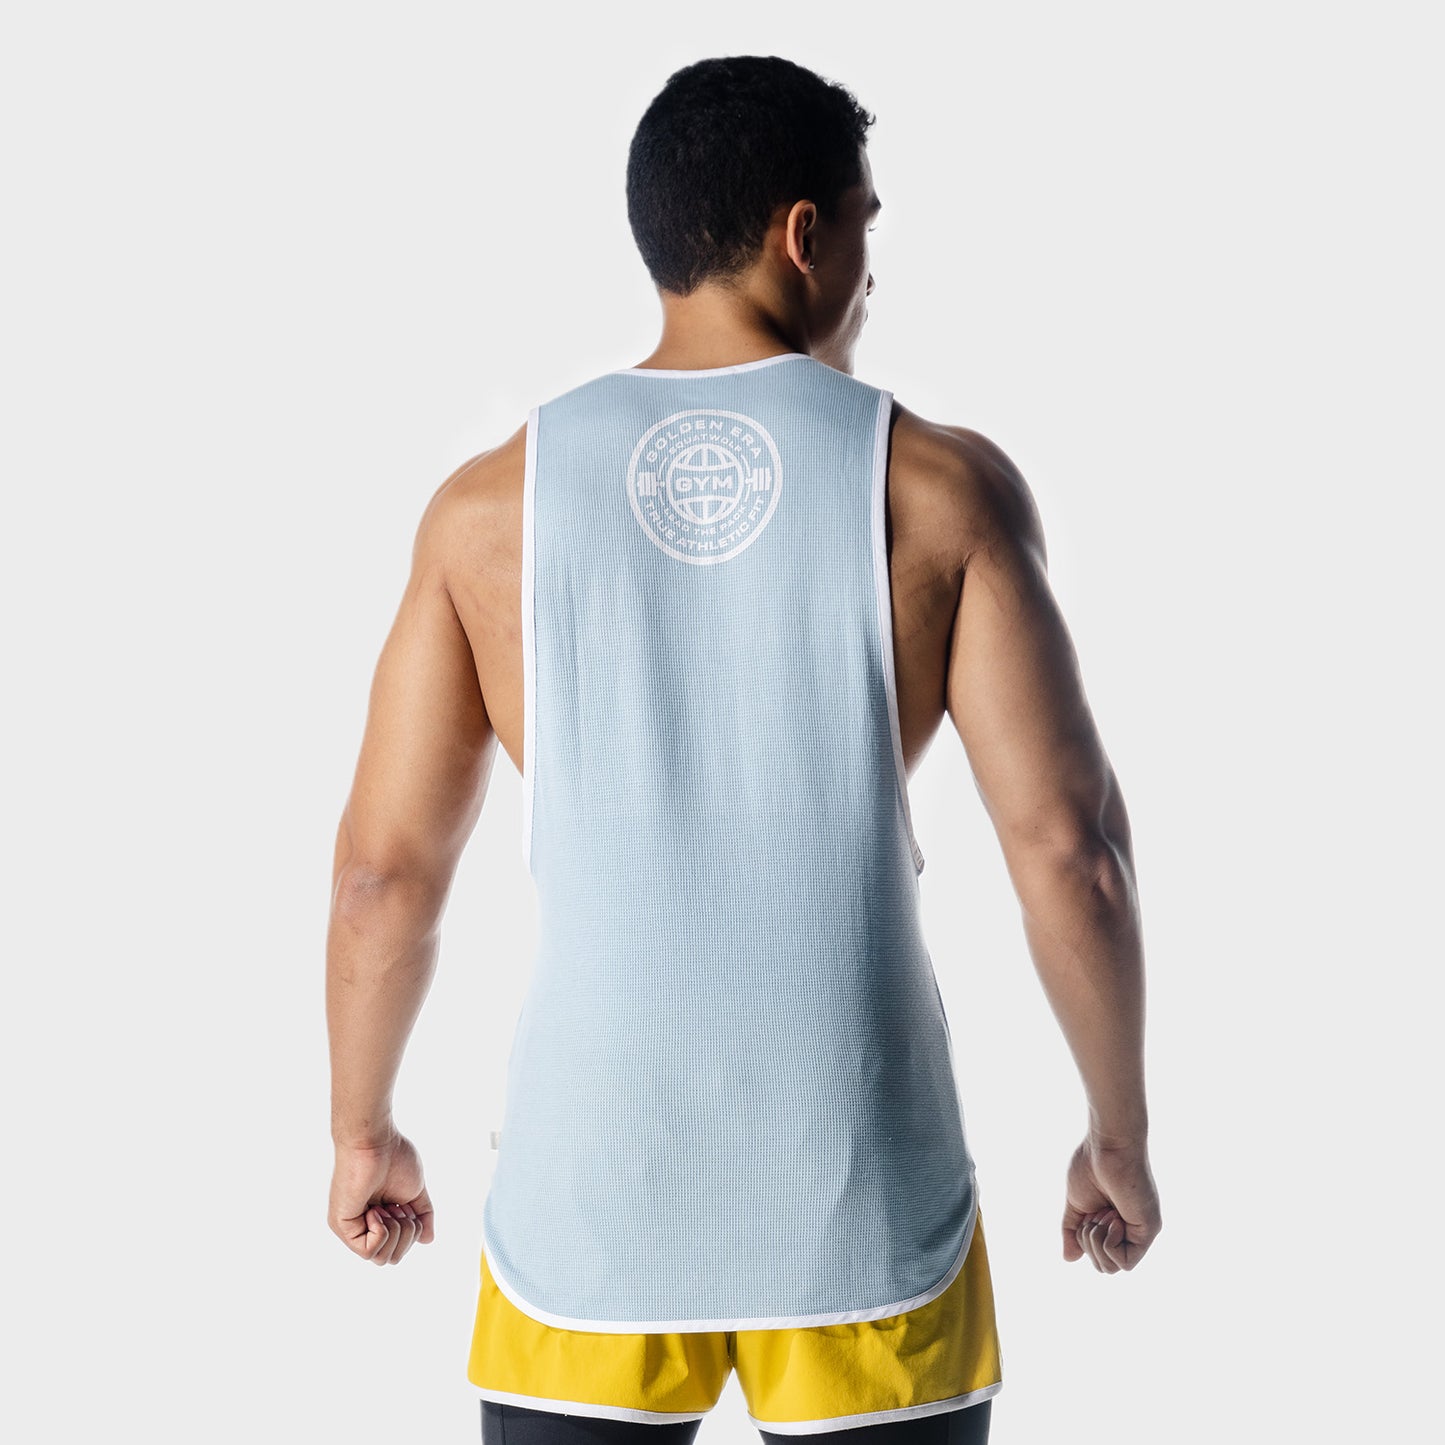 squatwolf-gym-wear-golden-era-waffle-tank-blue-workout-tank-tops-for-men